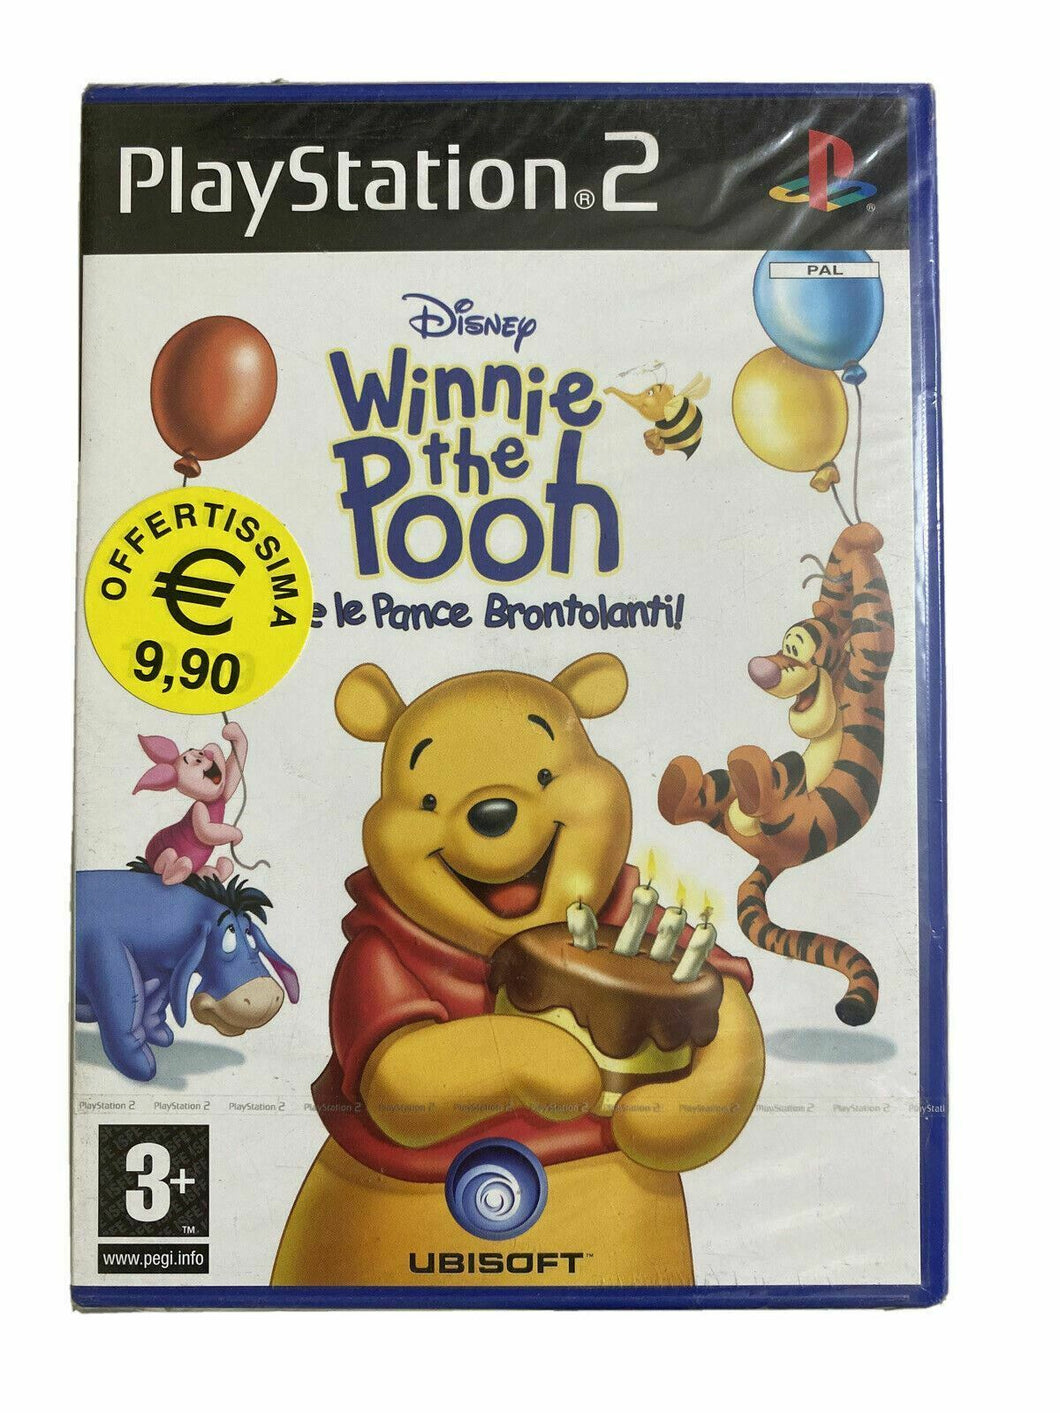 DISNEY WINNIE THE POOH E LE PANCE BRONTOLANTI GIOCO PER PlayStation 2 PS2 BAMBIN